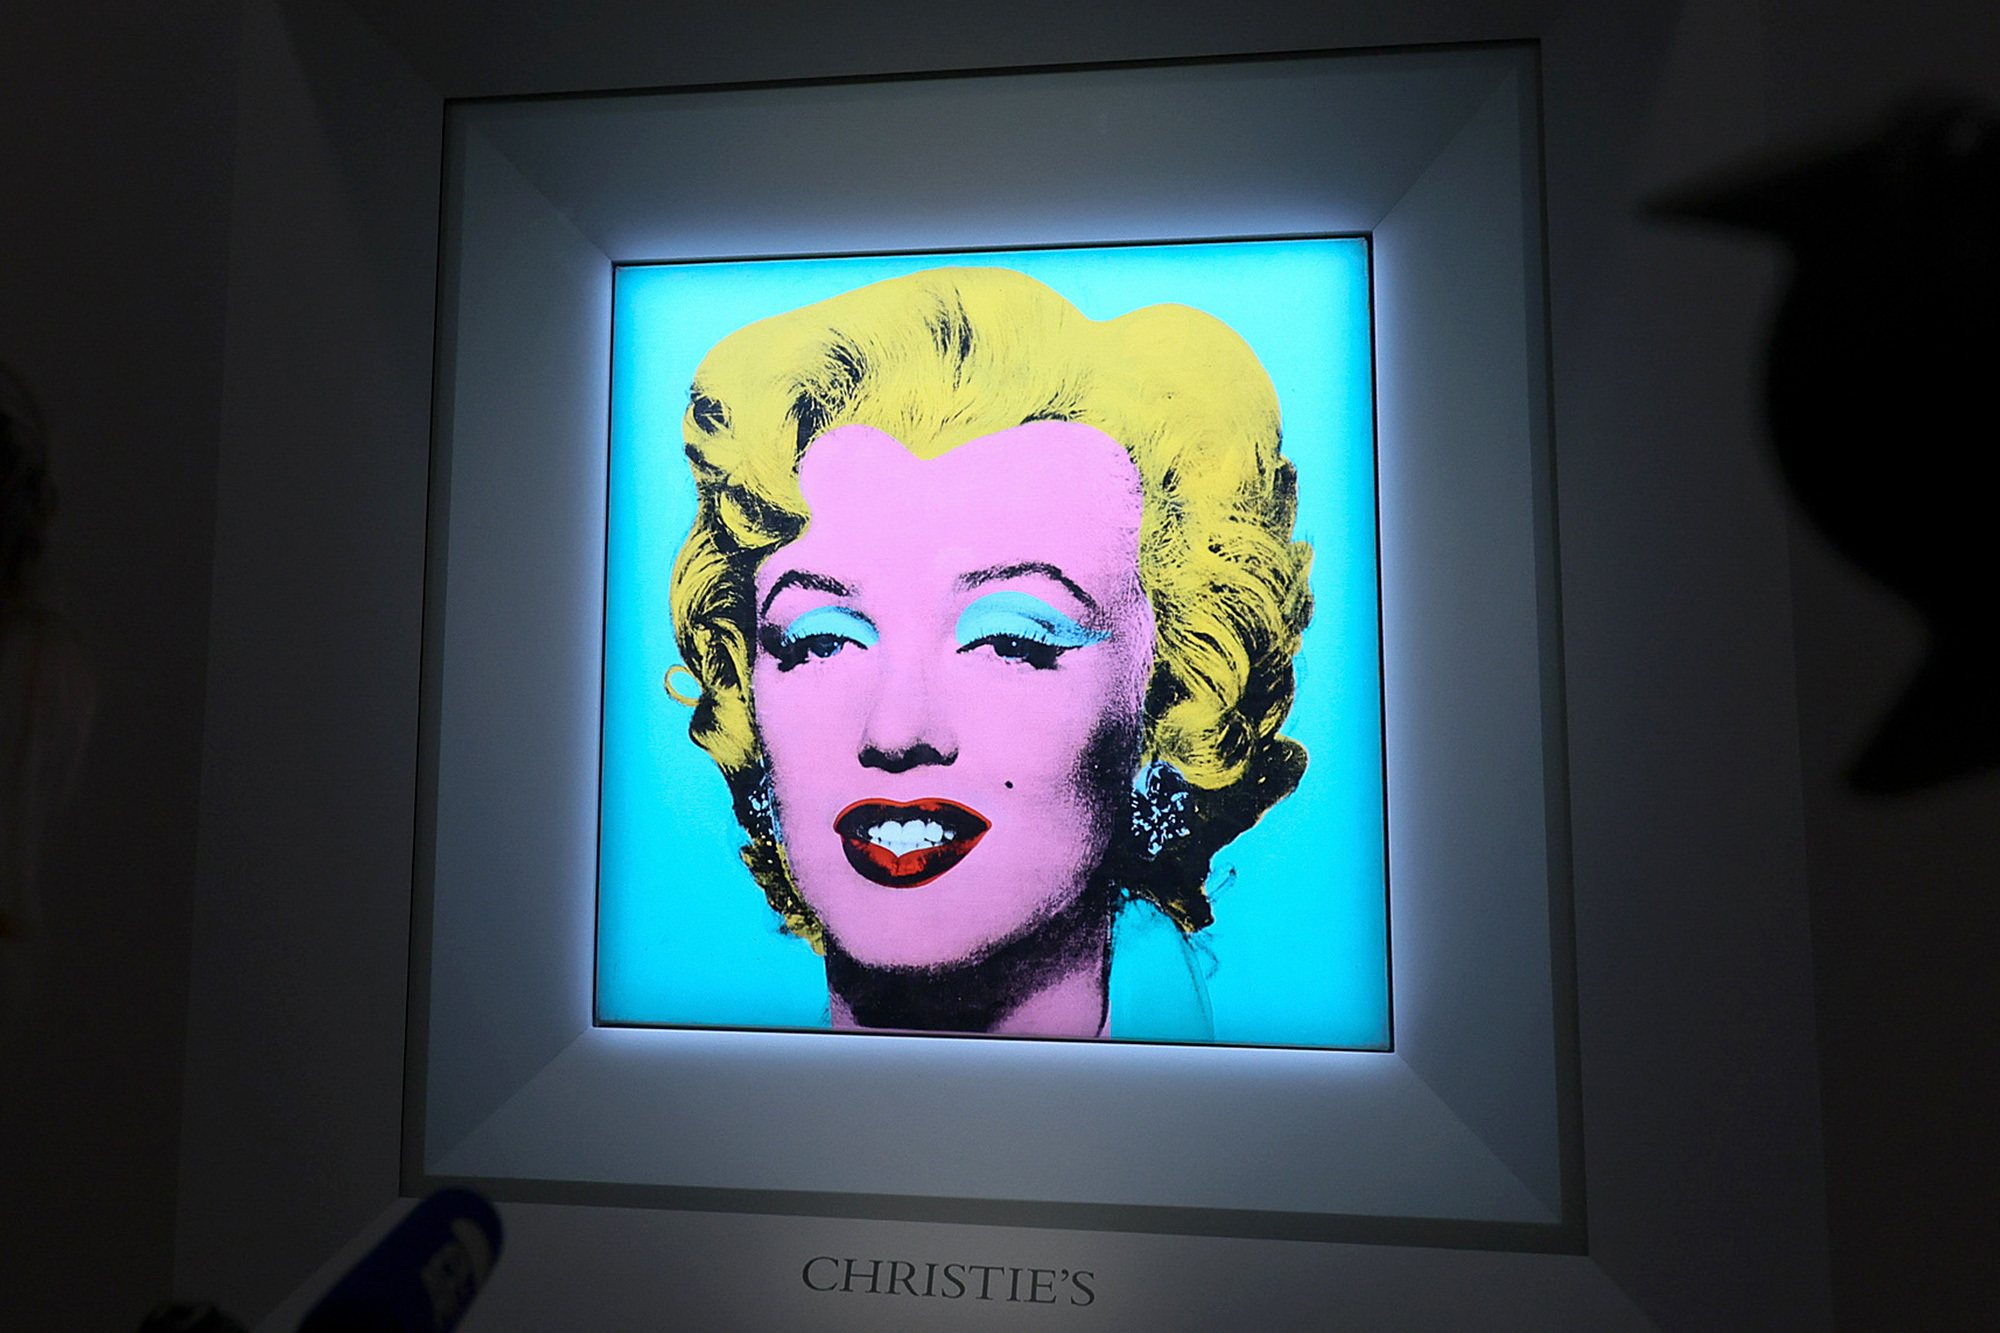 Andy Warhol portrait of Marilyn Monroe